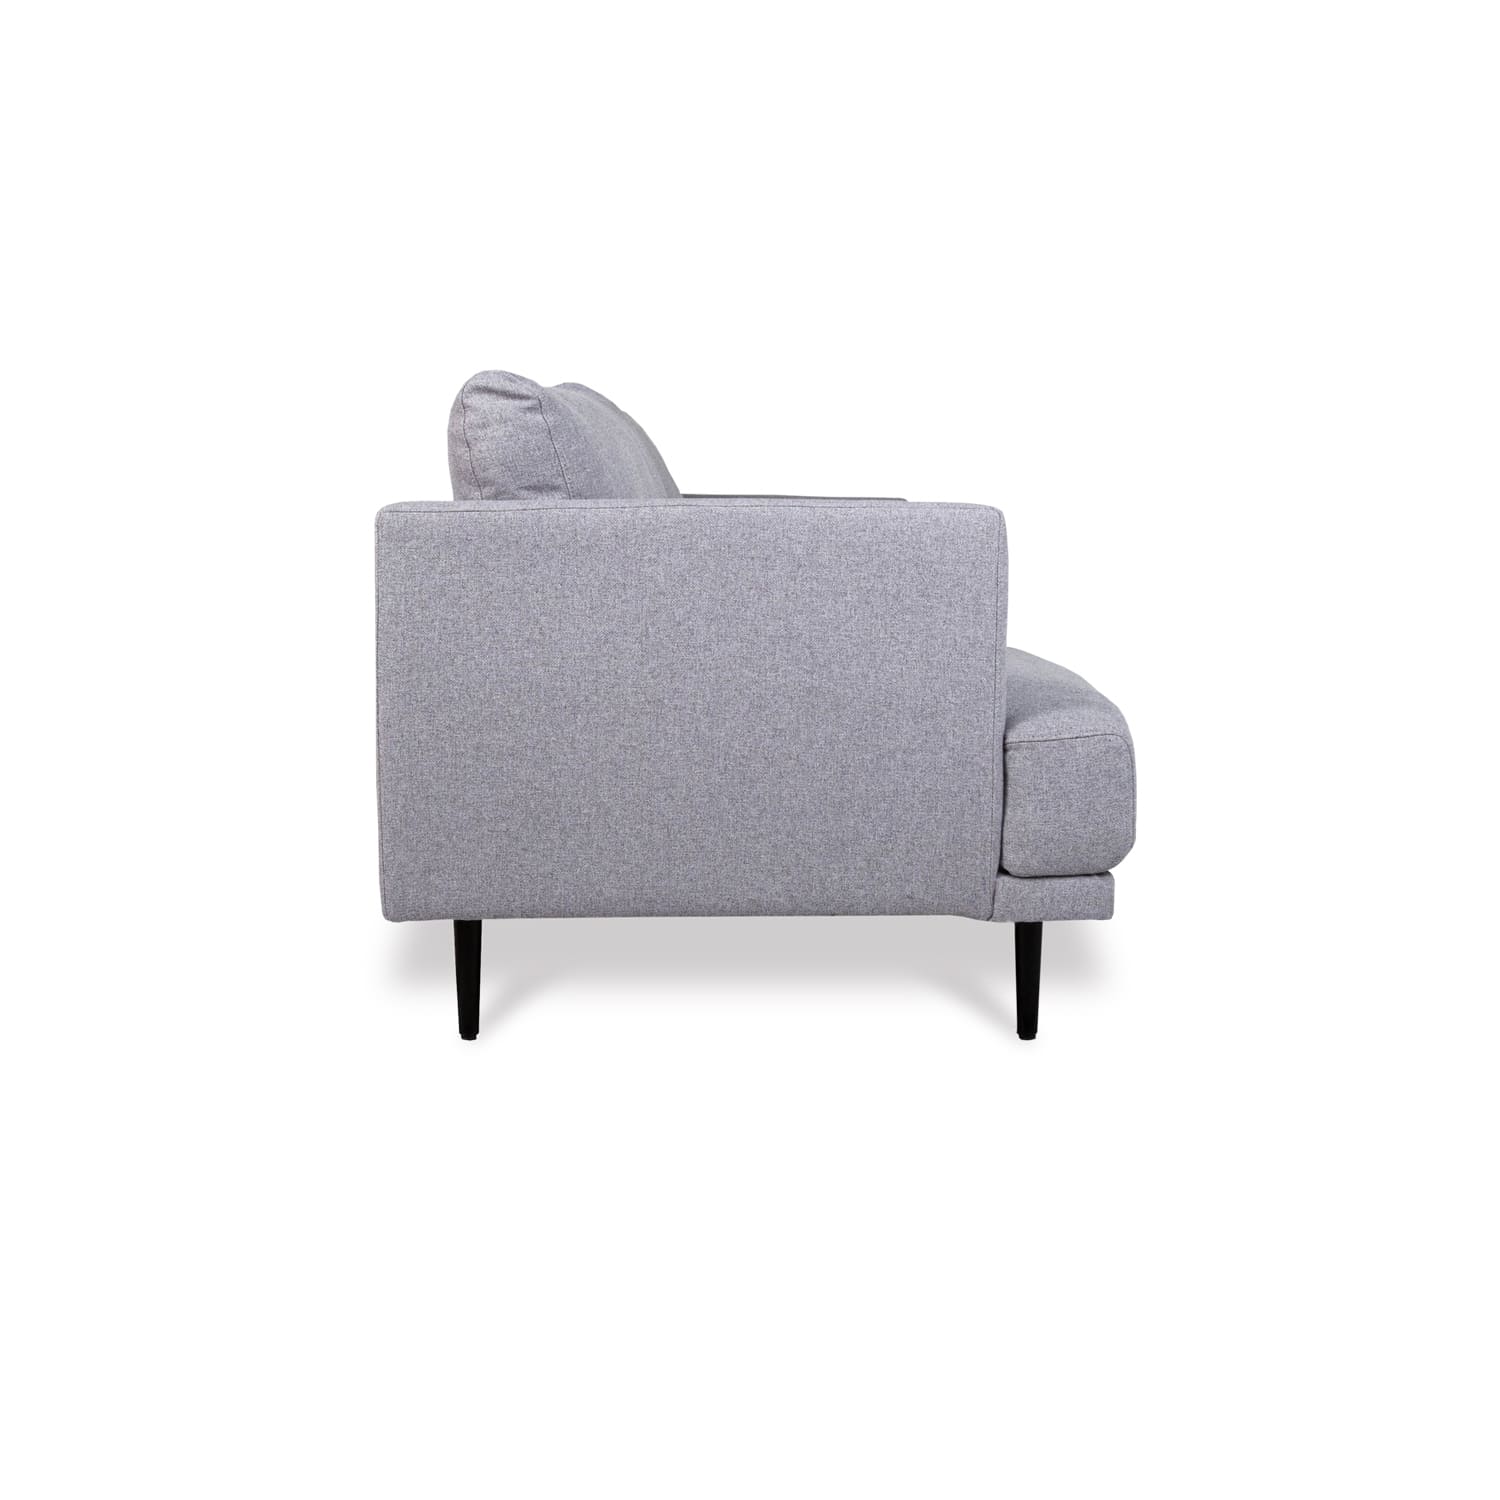 Aubrey Fabric 3 Seat Sofa